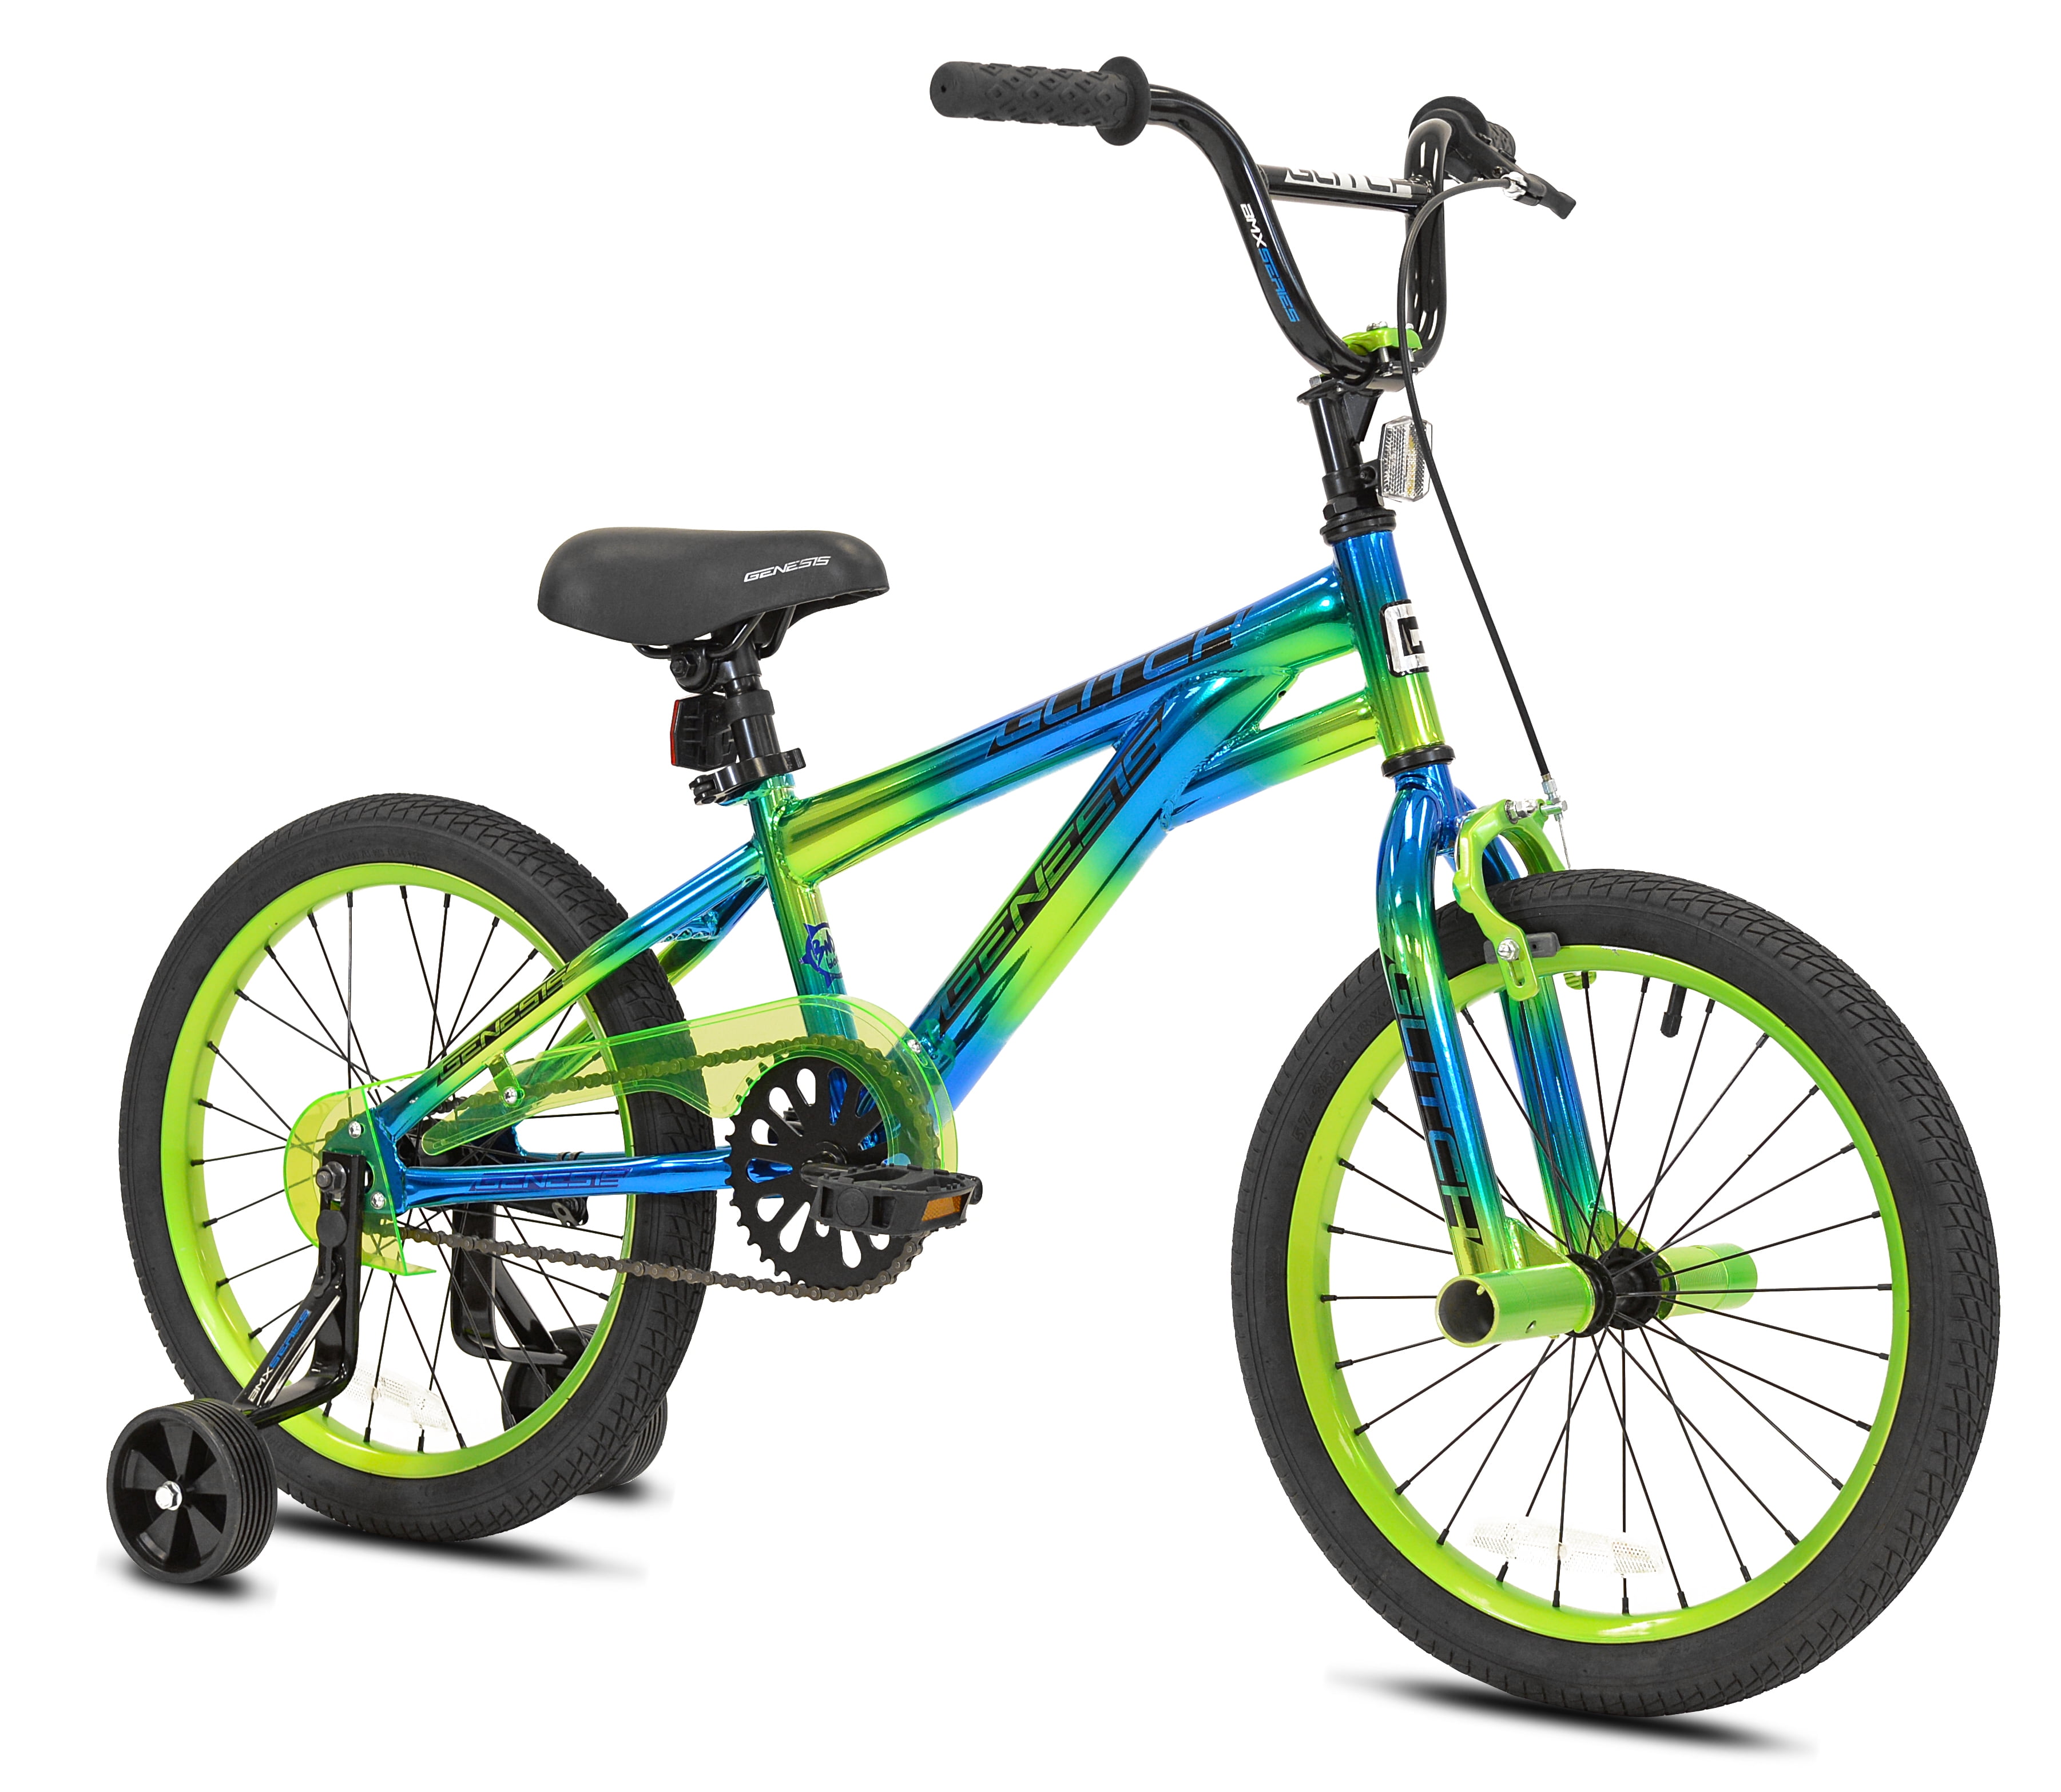 Genesis 18" Glitch Boy's BMX Bike, Blue/Green - 476Da32D 4864 49a2 B2D9 9707c06ee9ea 2.2a0aff273aD3cf974820194fb5bcD861